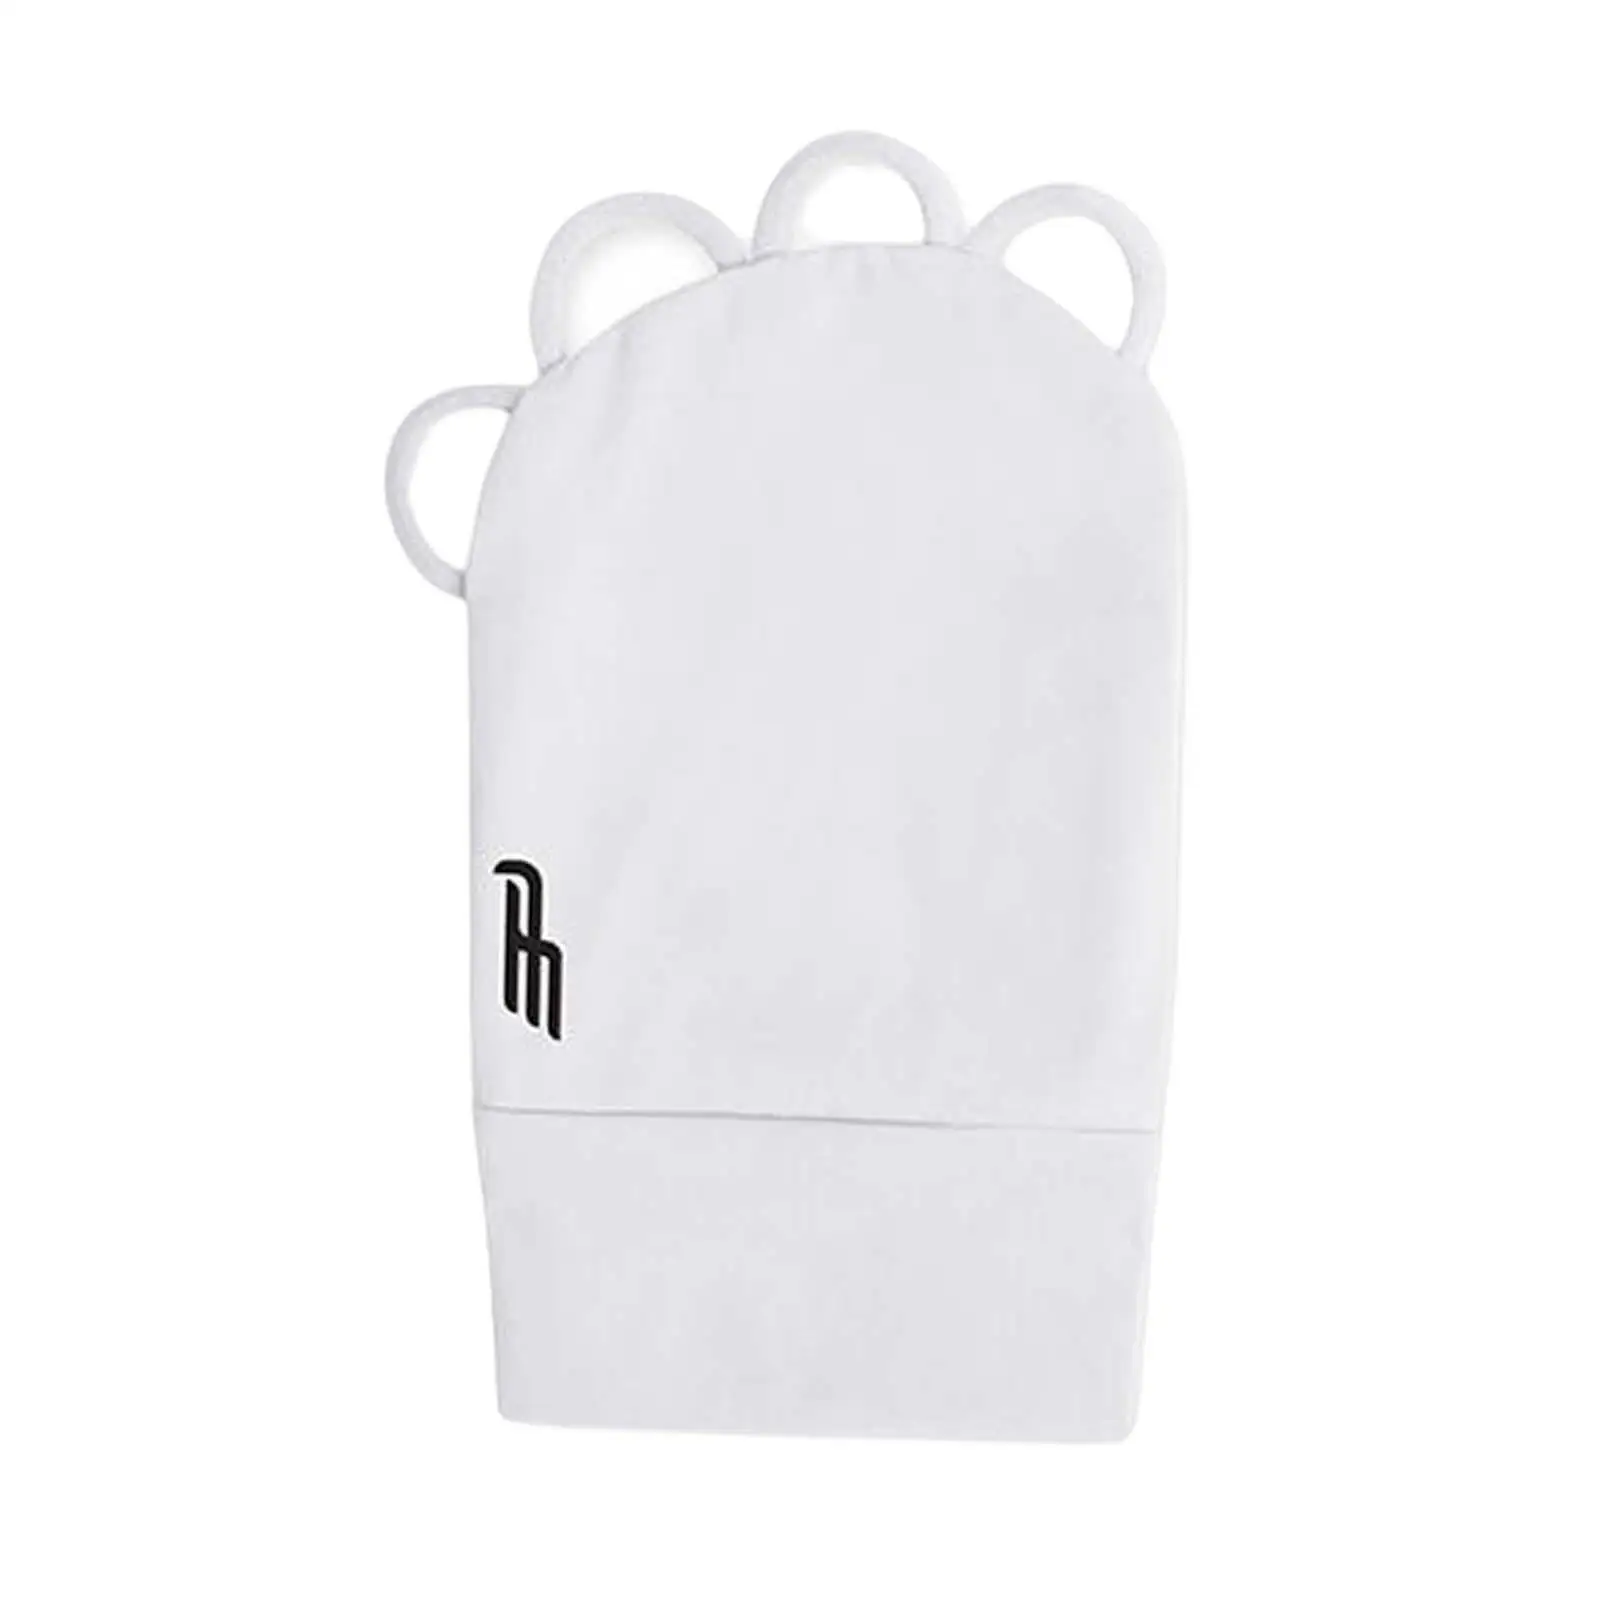 Golf Half Finger Glove Ice Silk Fabric Comfortable Anti Pilling Durable for Men Women Accessories Elastic Skin Friendly Soft